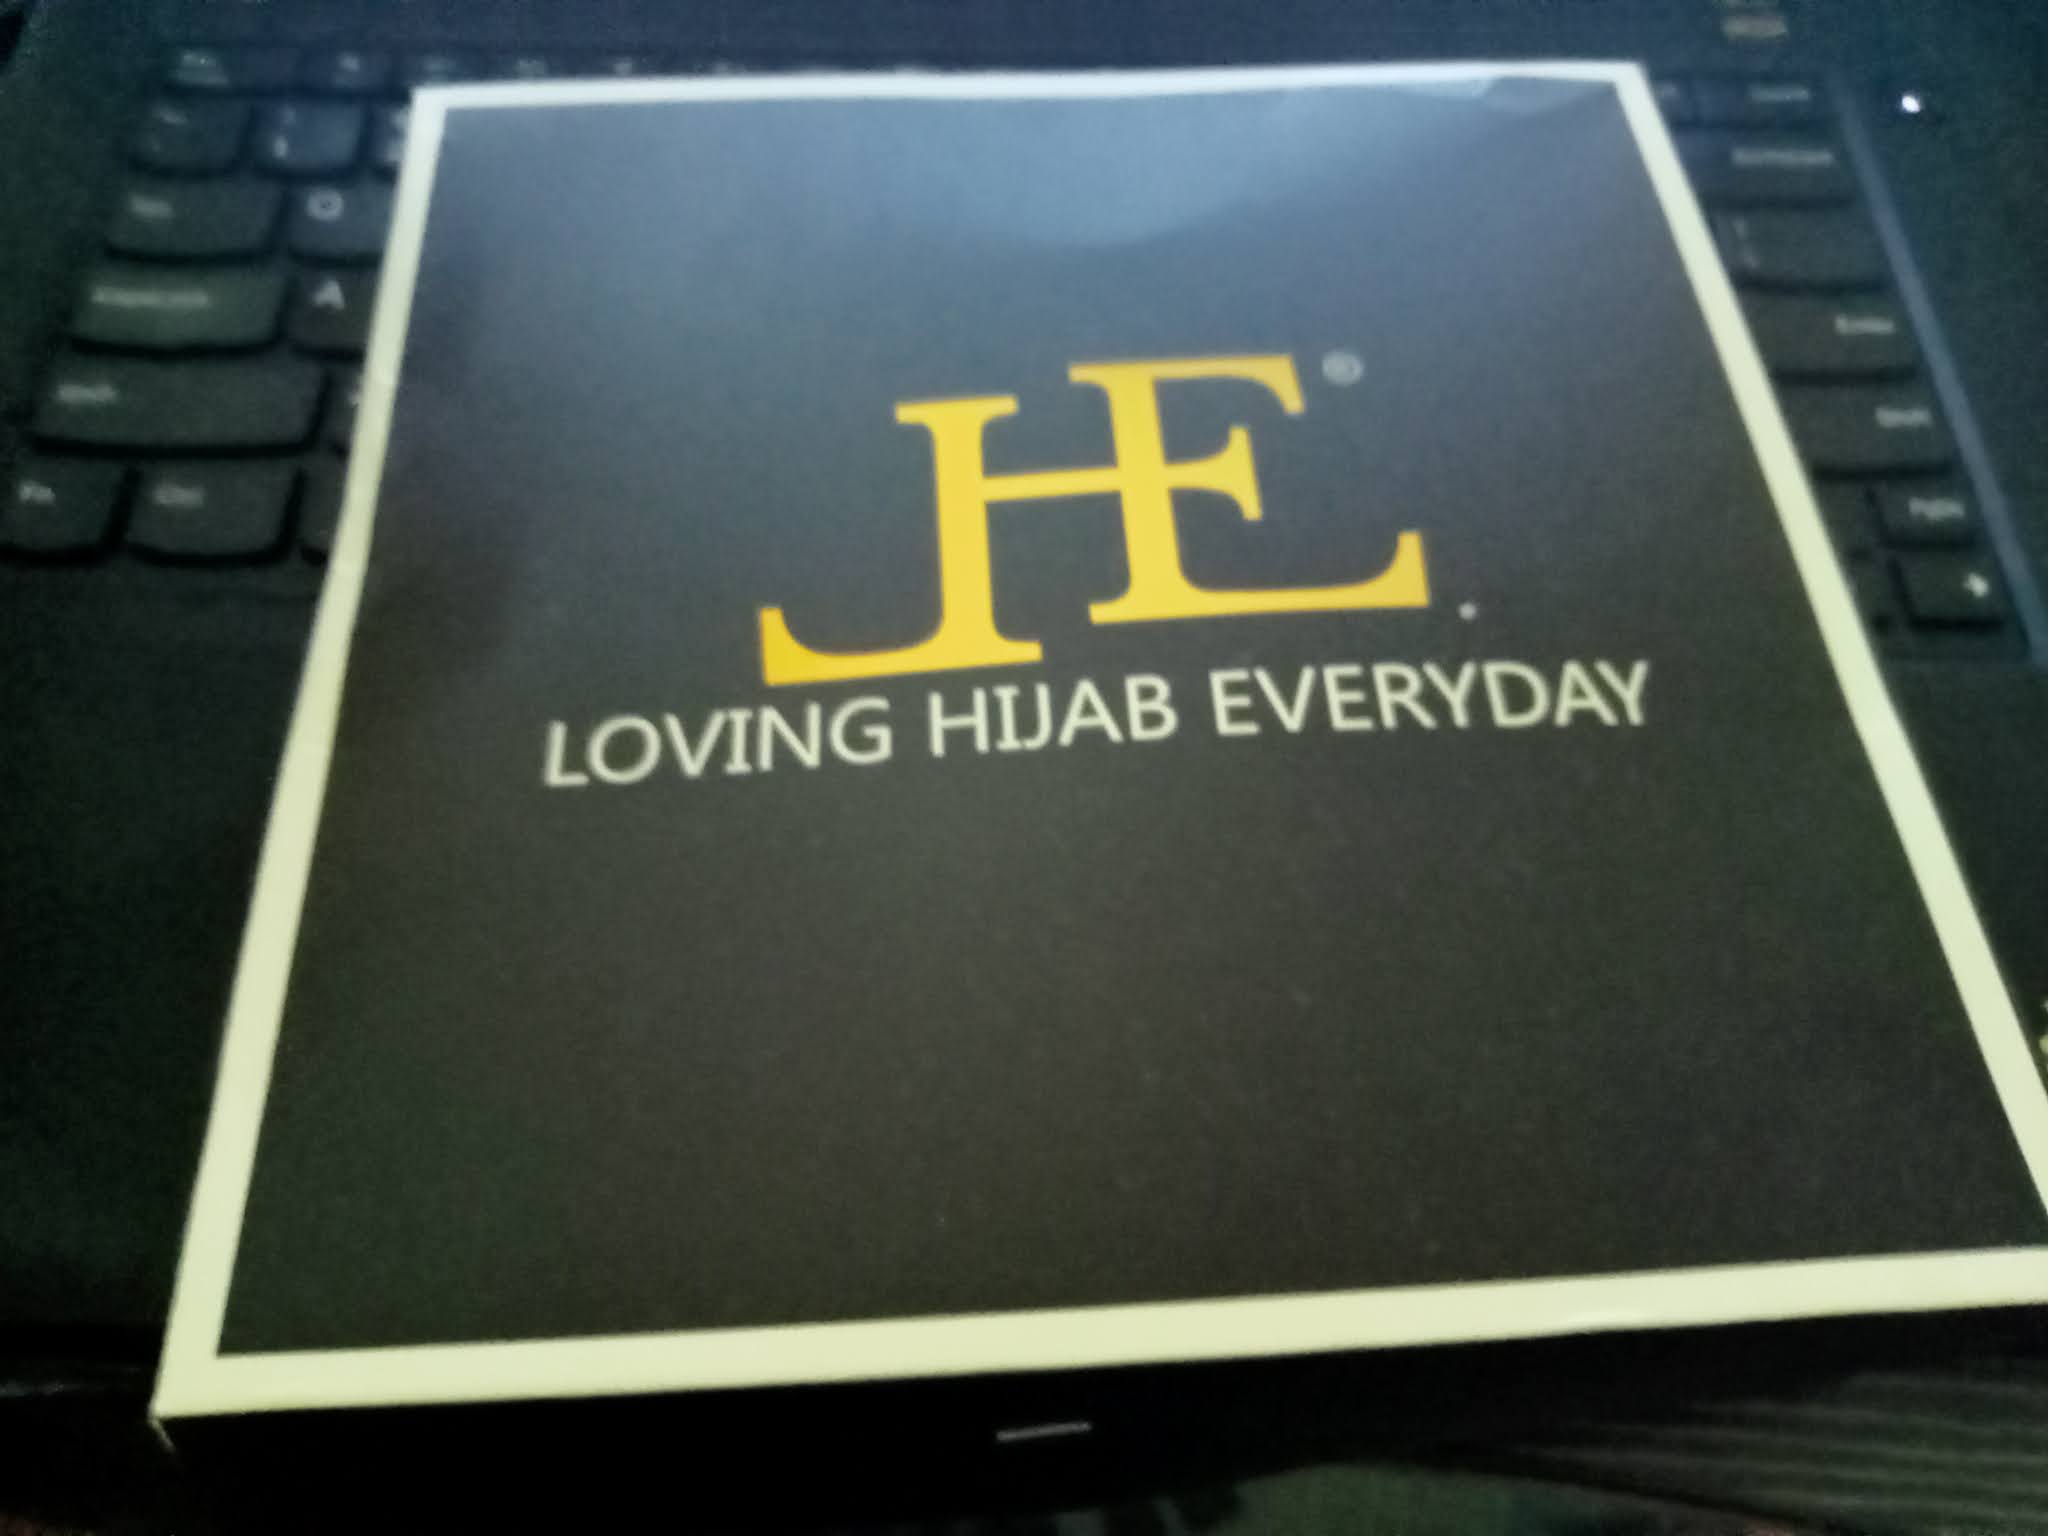 Loving hijab everyday